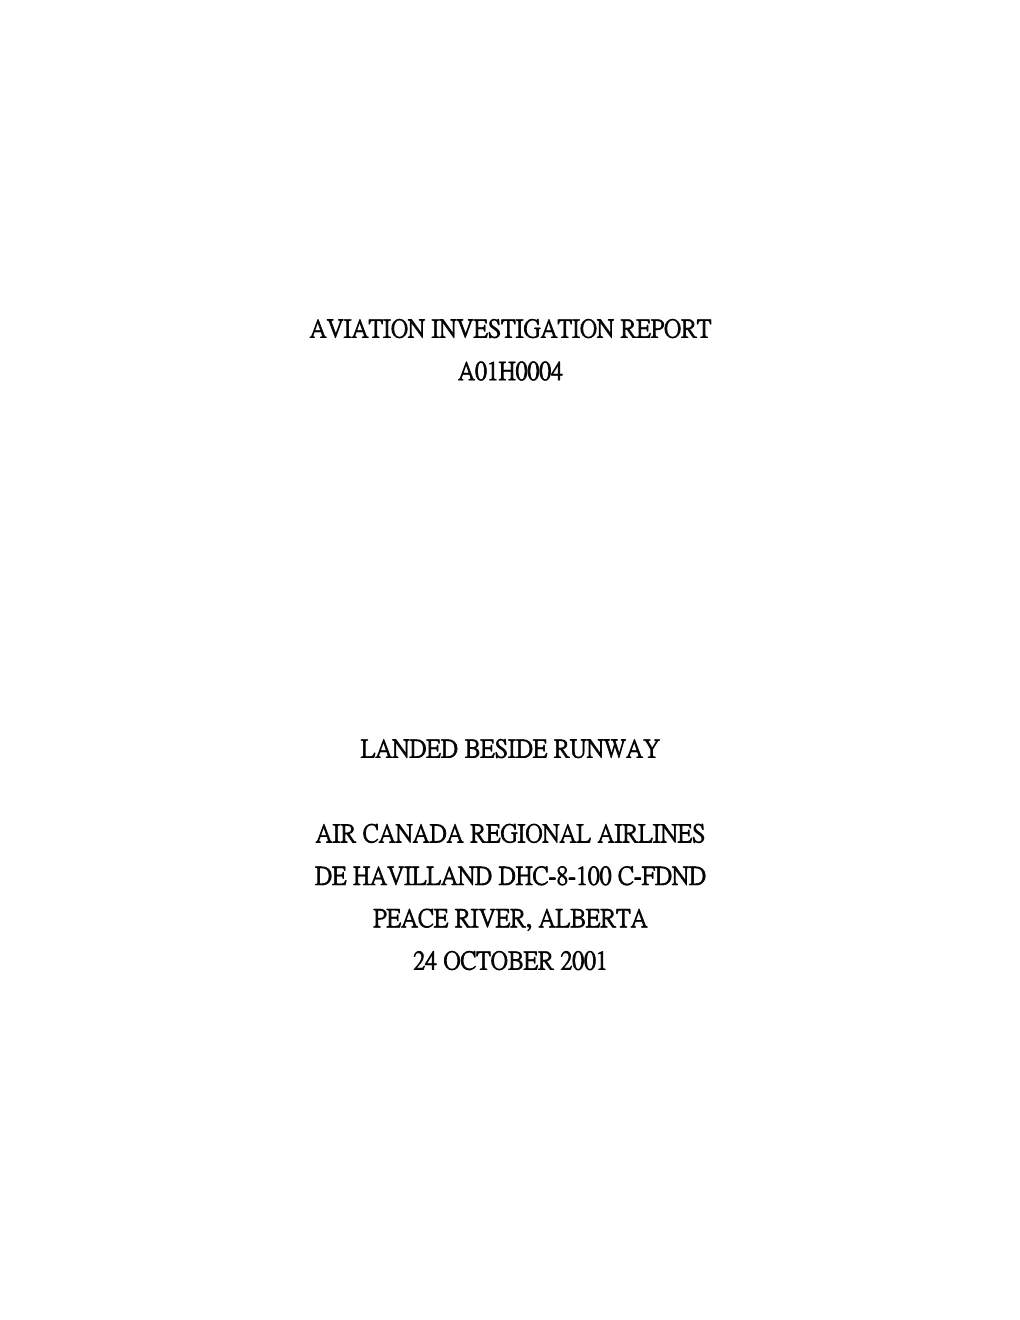 Aviation Investigation Report A01h0004 Landed Beside